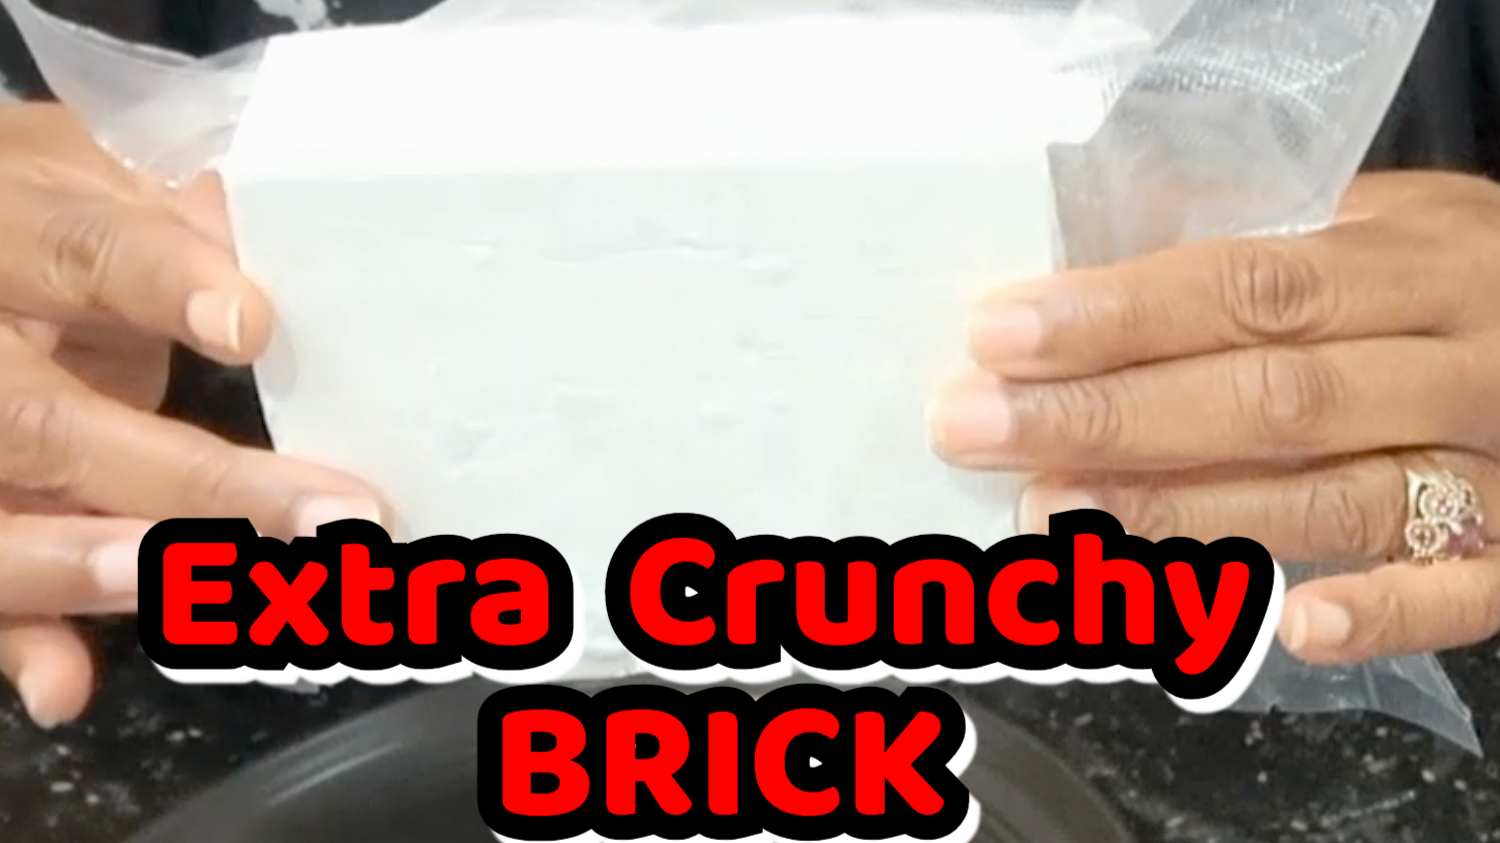 PRESSED Cornstarch & Bot San Day Brick – Satisfying Crunchy